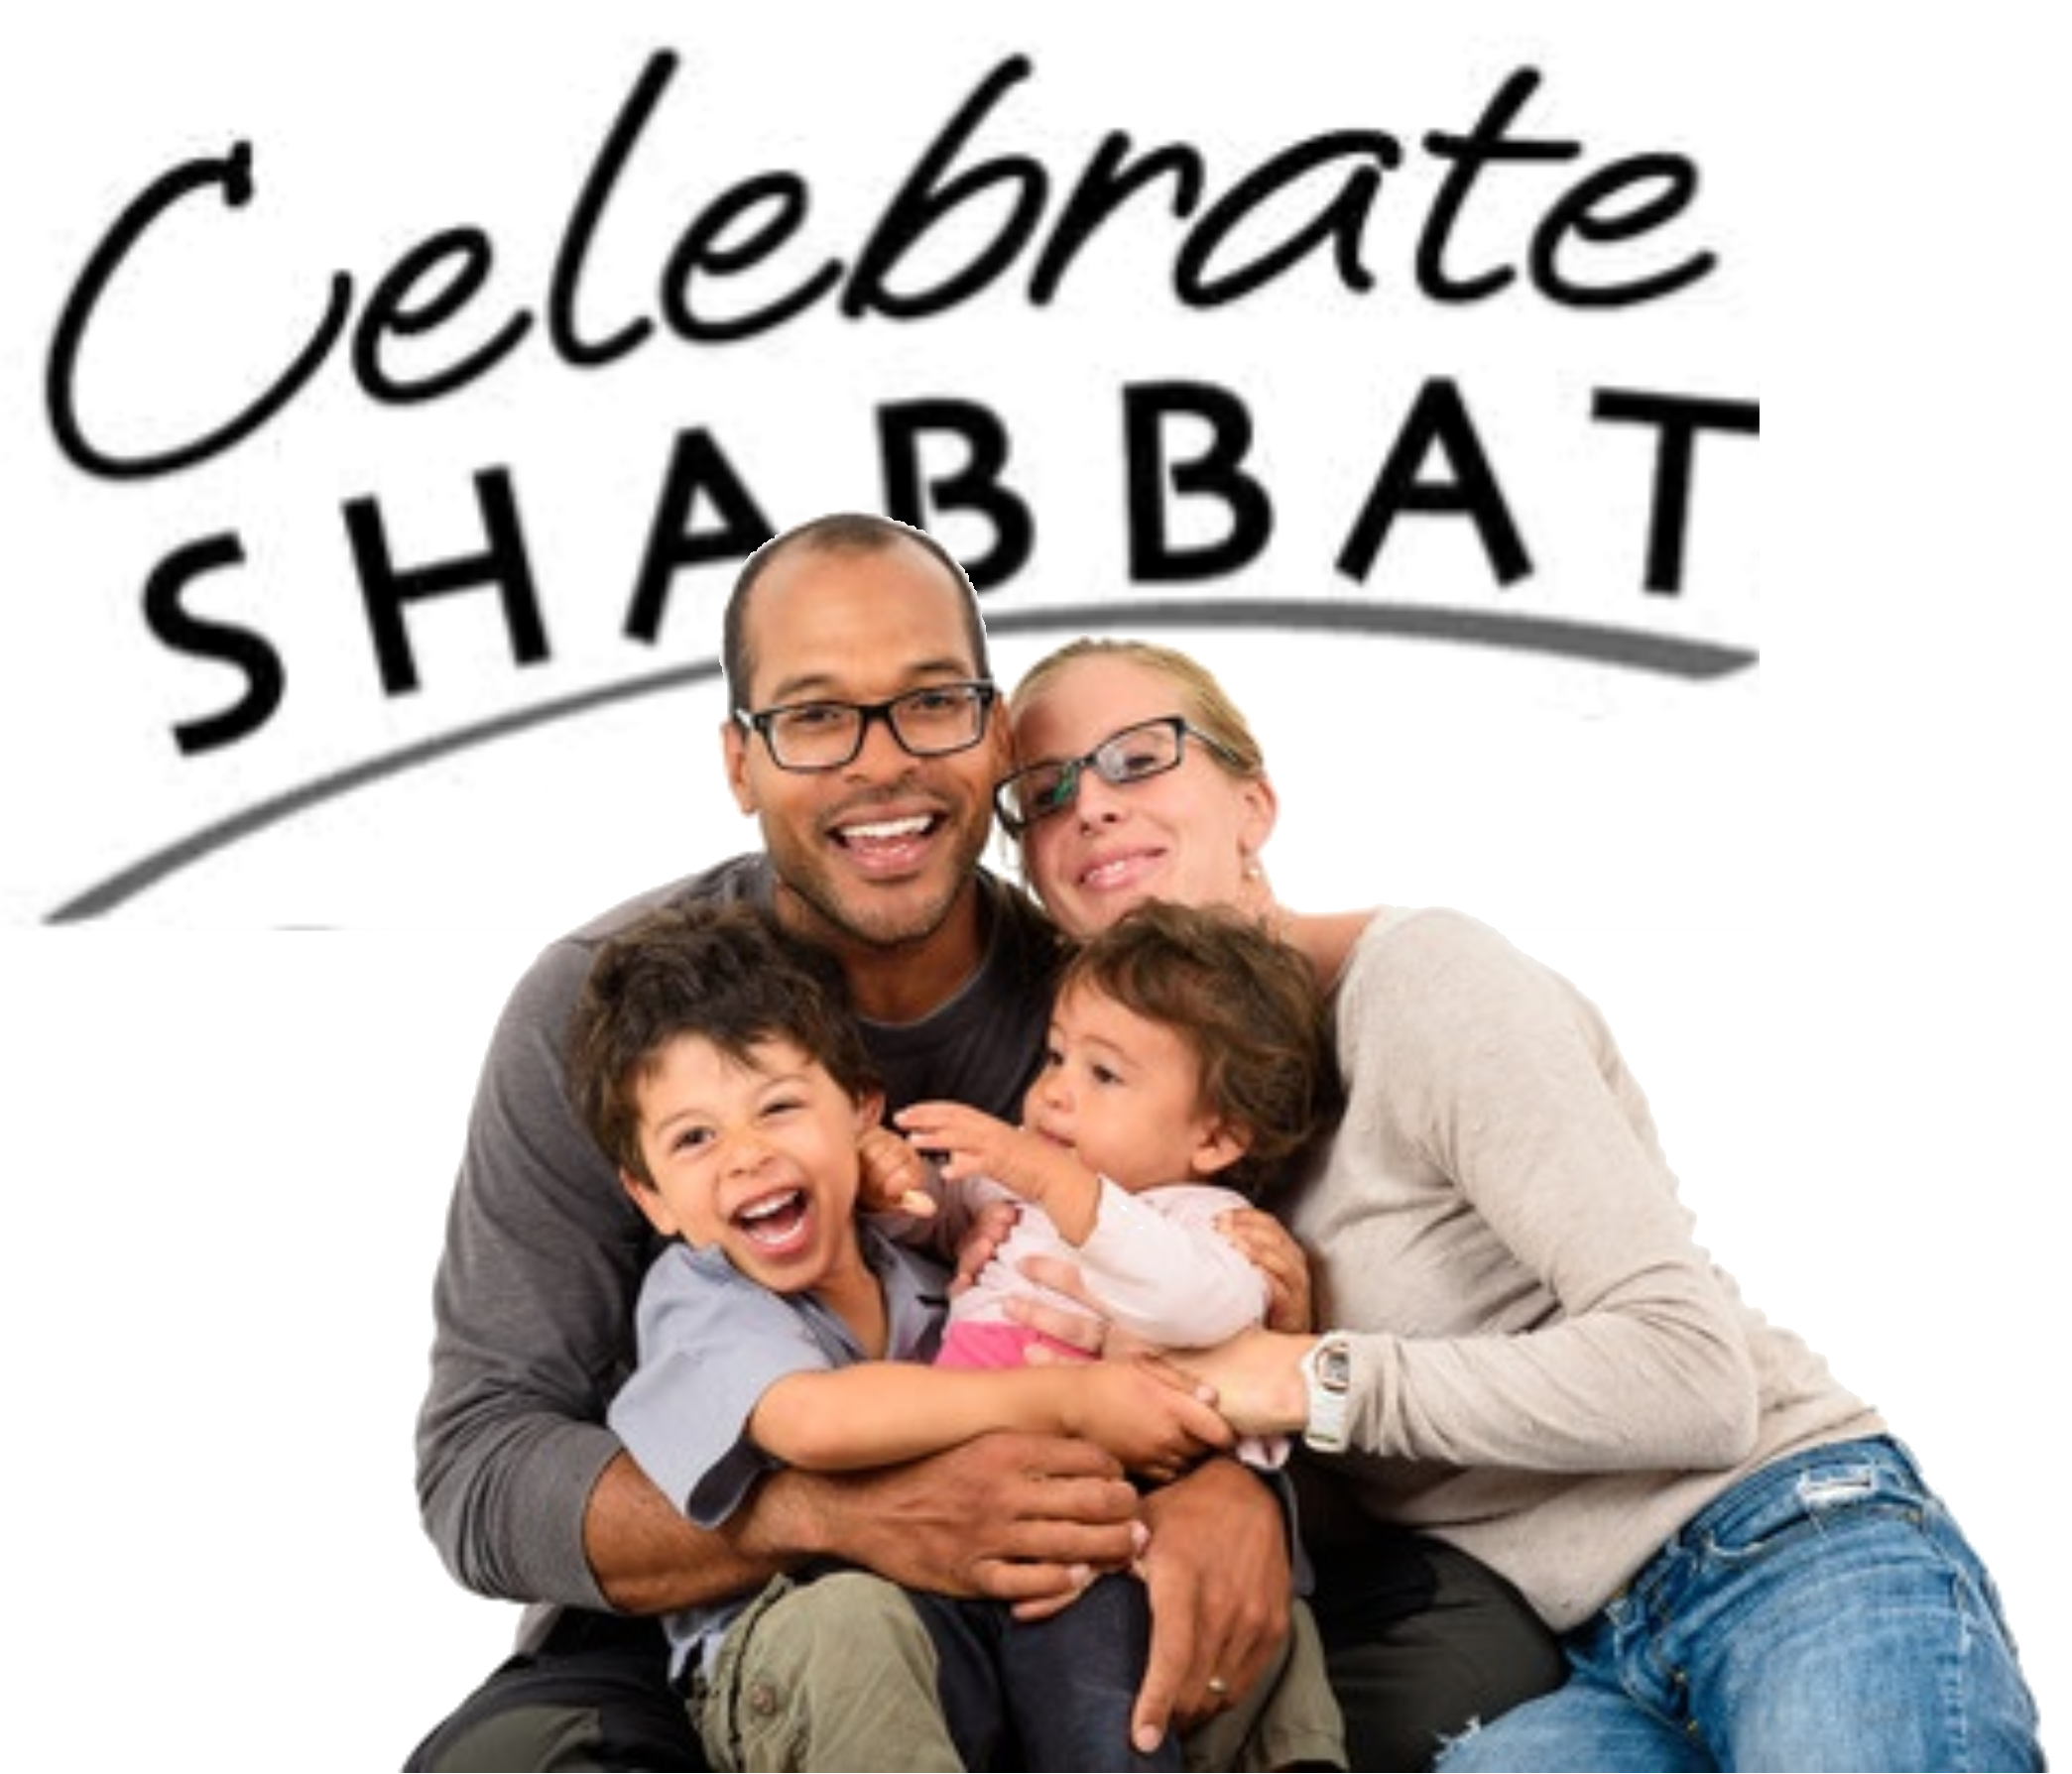 Shabbat Evening Service with the Shabbat Shalom Band